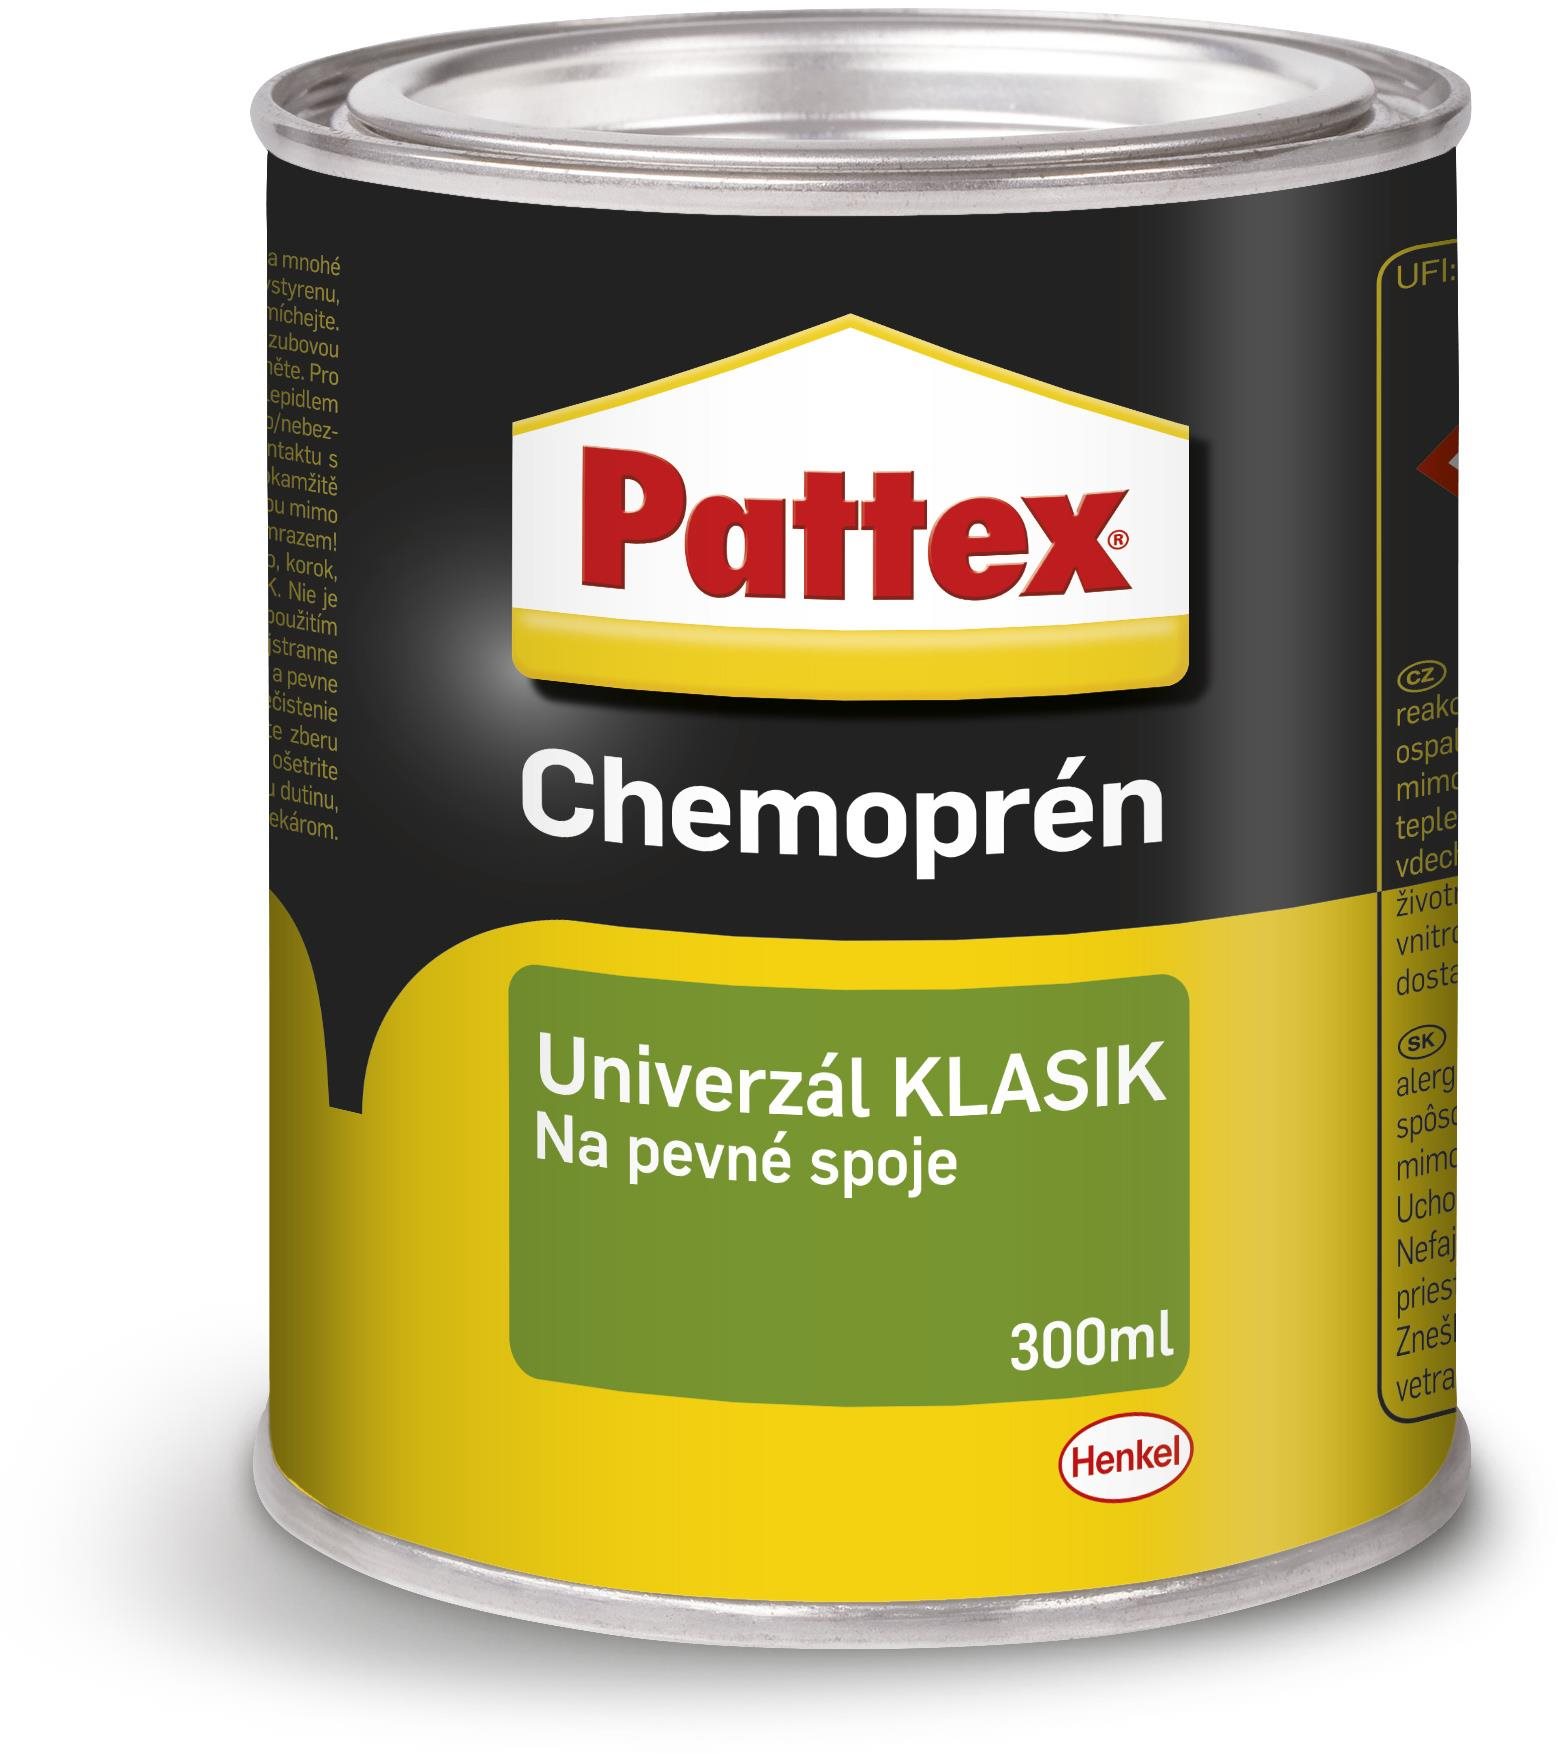 PATTEX Chemoprene Universal KLASIK